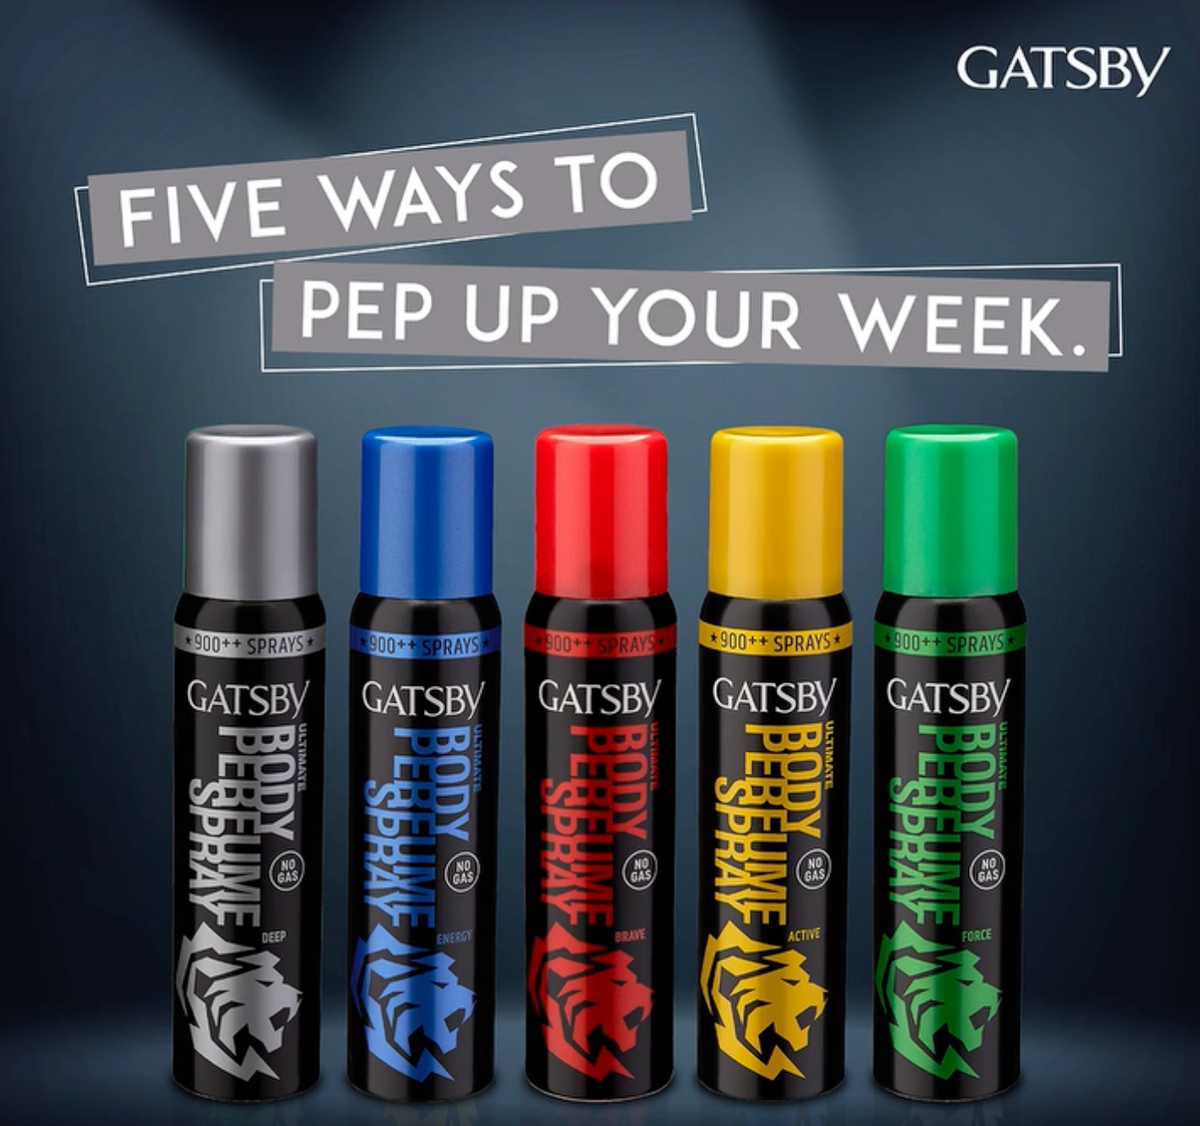 Gatsby Ultimate Body Perfume Spray - Energy, 120 ml : Buy 1 Get 1 Free! Gardenia Cosmotrade LLP